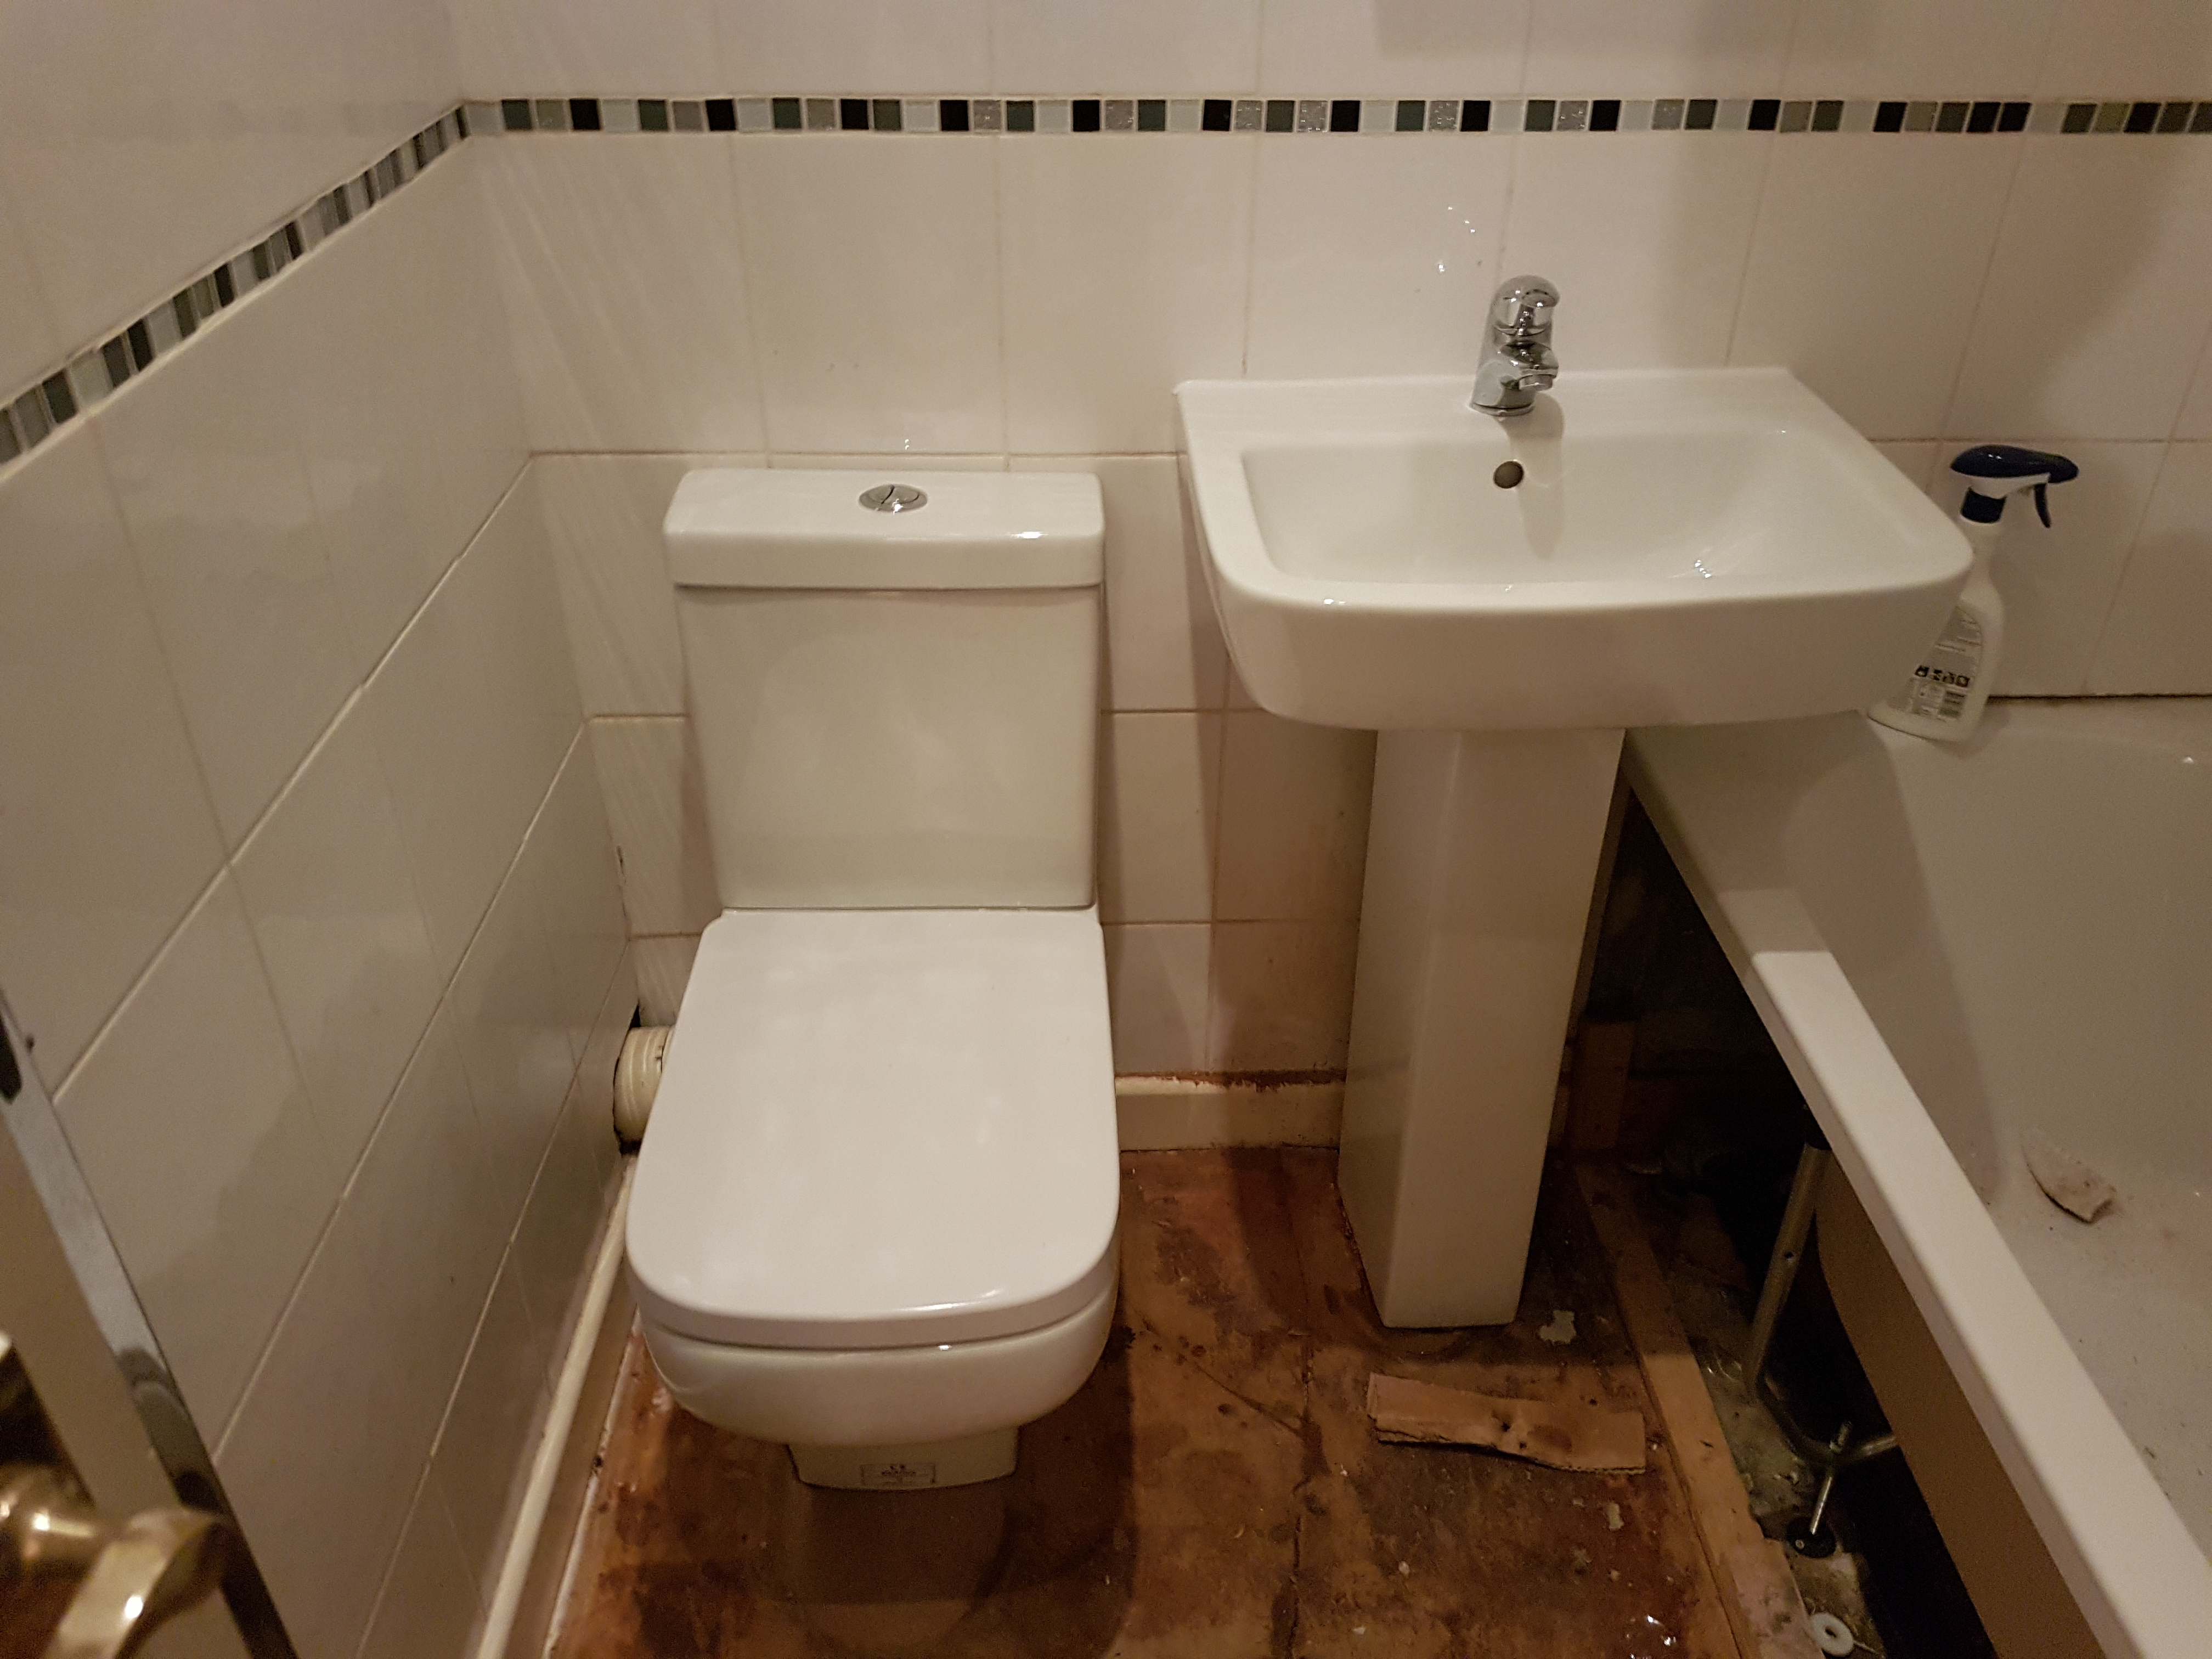 Bathroom suite, toilet, sink, bath